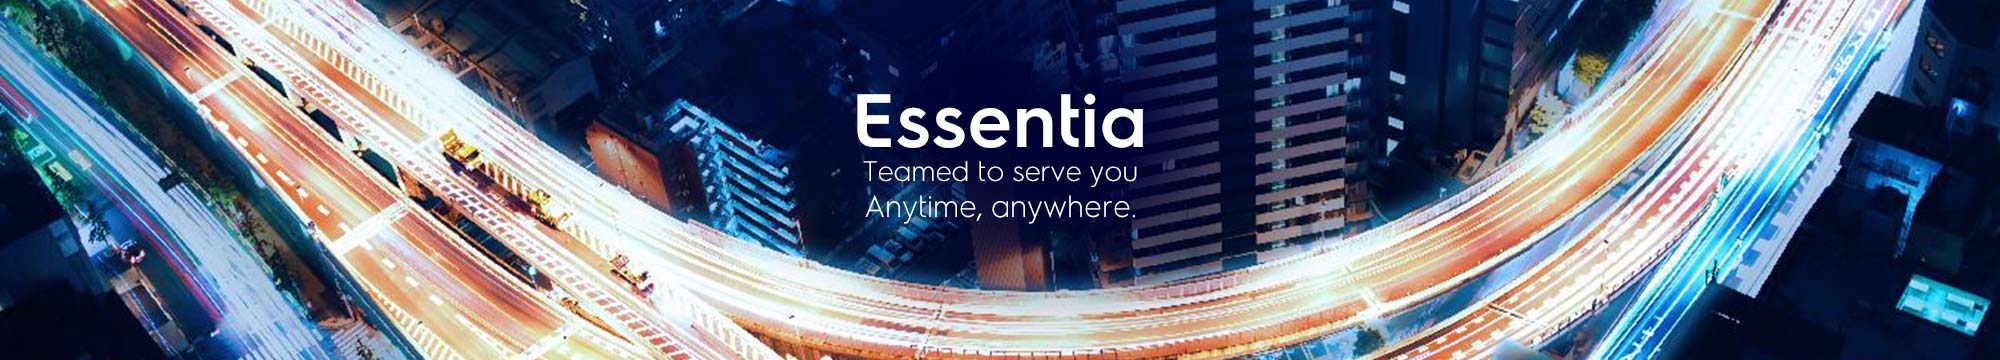 Essentia-Customer-Care_